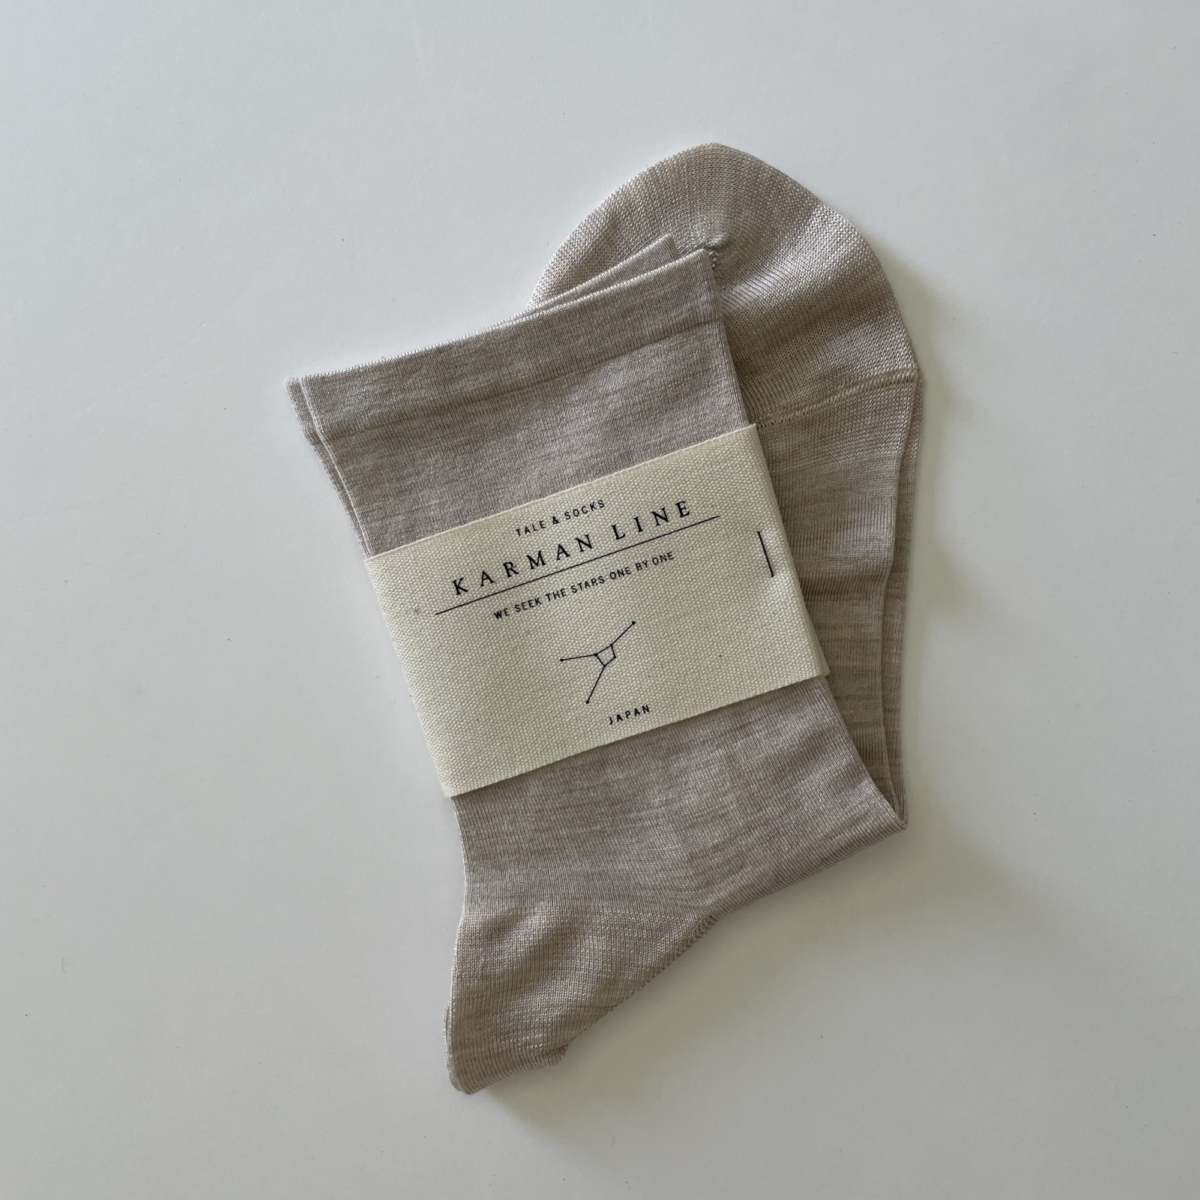 KARMAN LINE CANCER / socks / Ecru